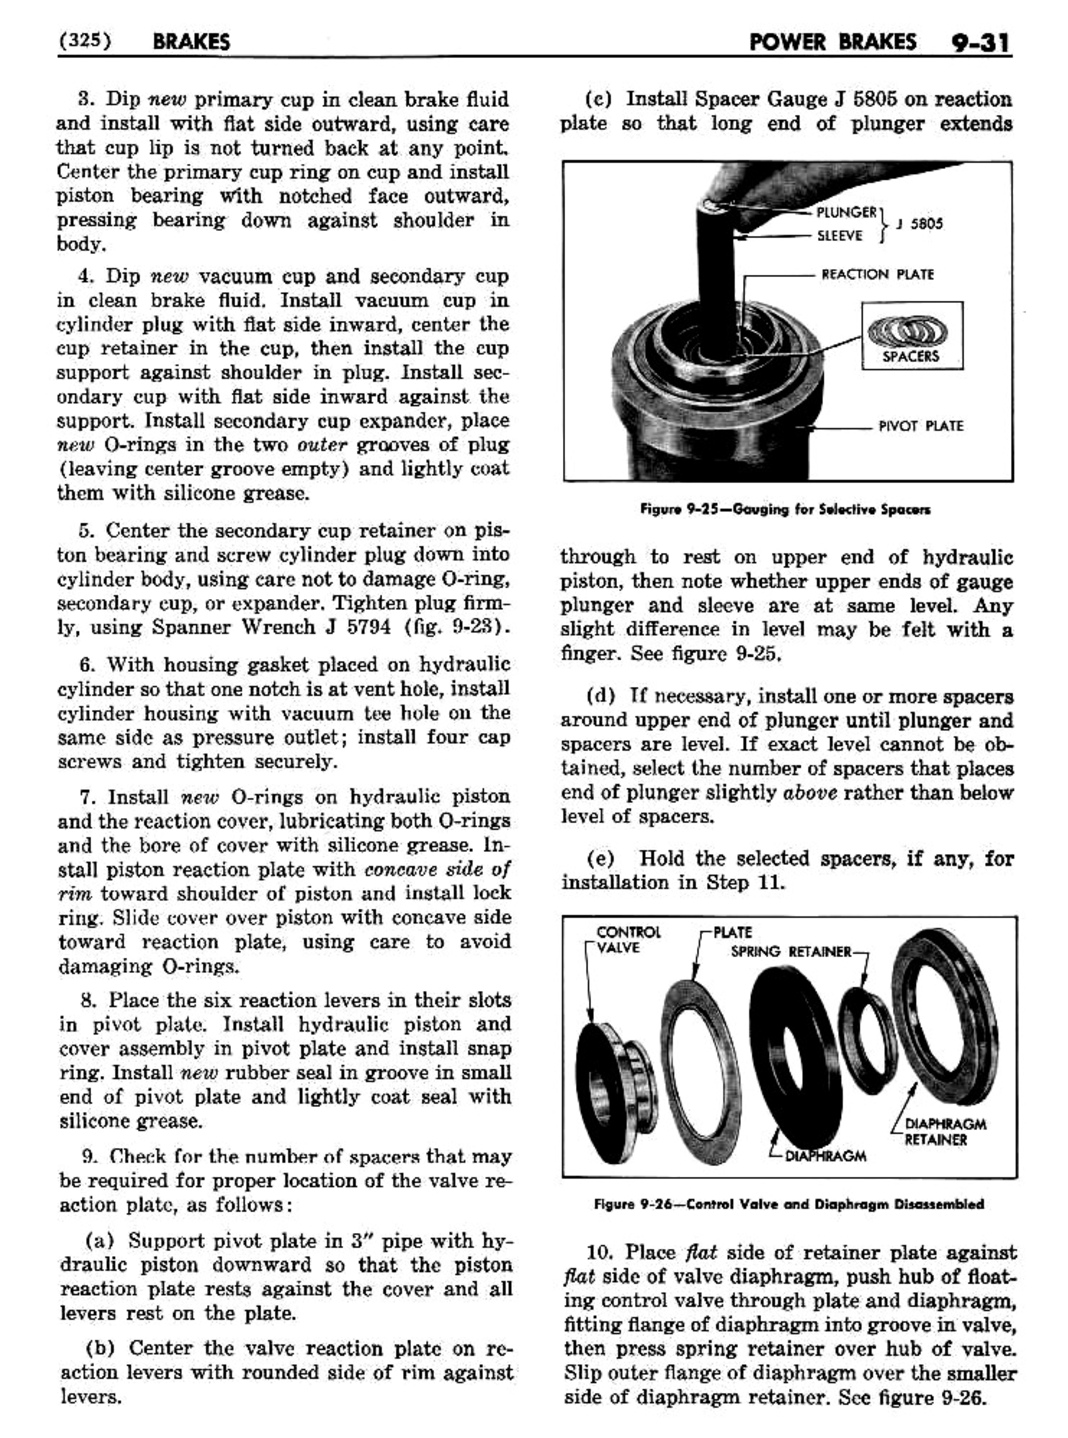 n_10 1956 Buick Shop Manual - Brakes-031-031.jpg